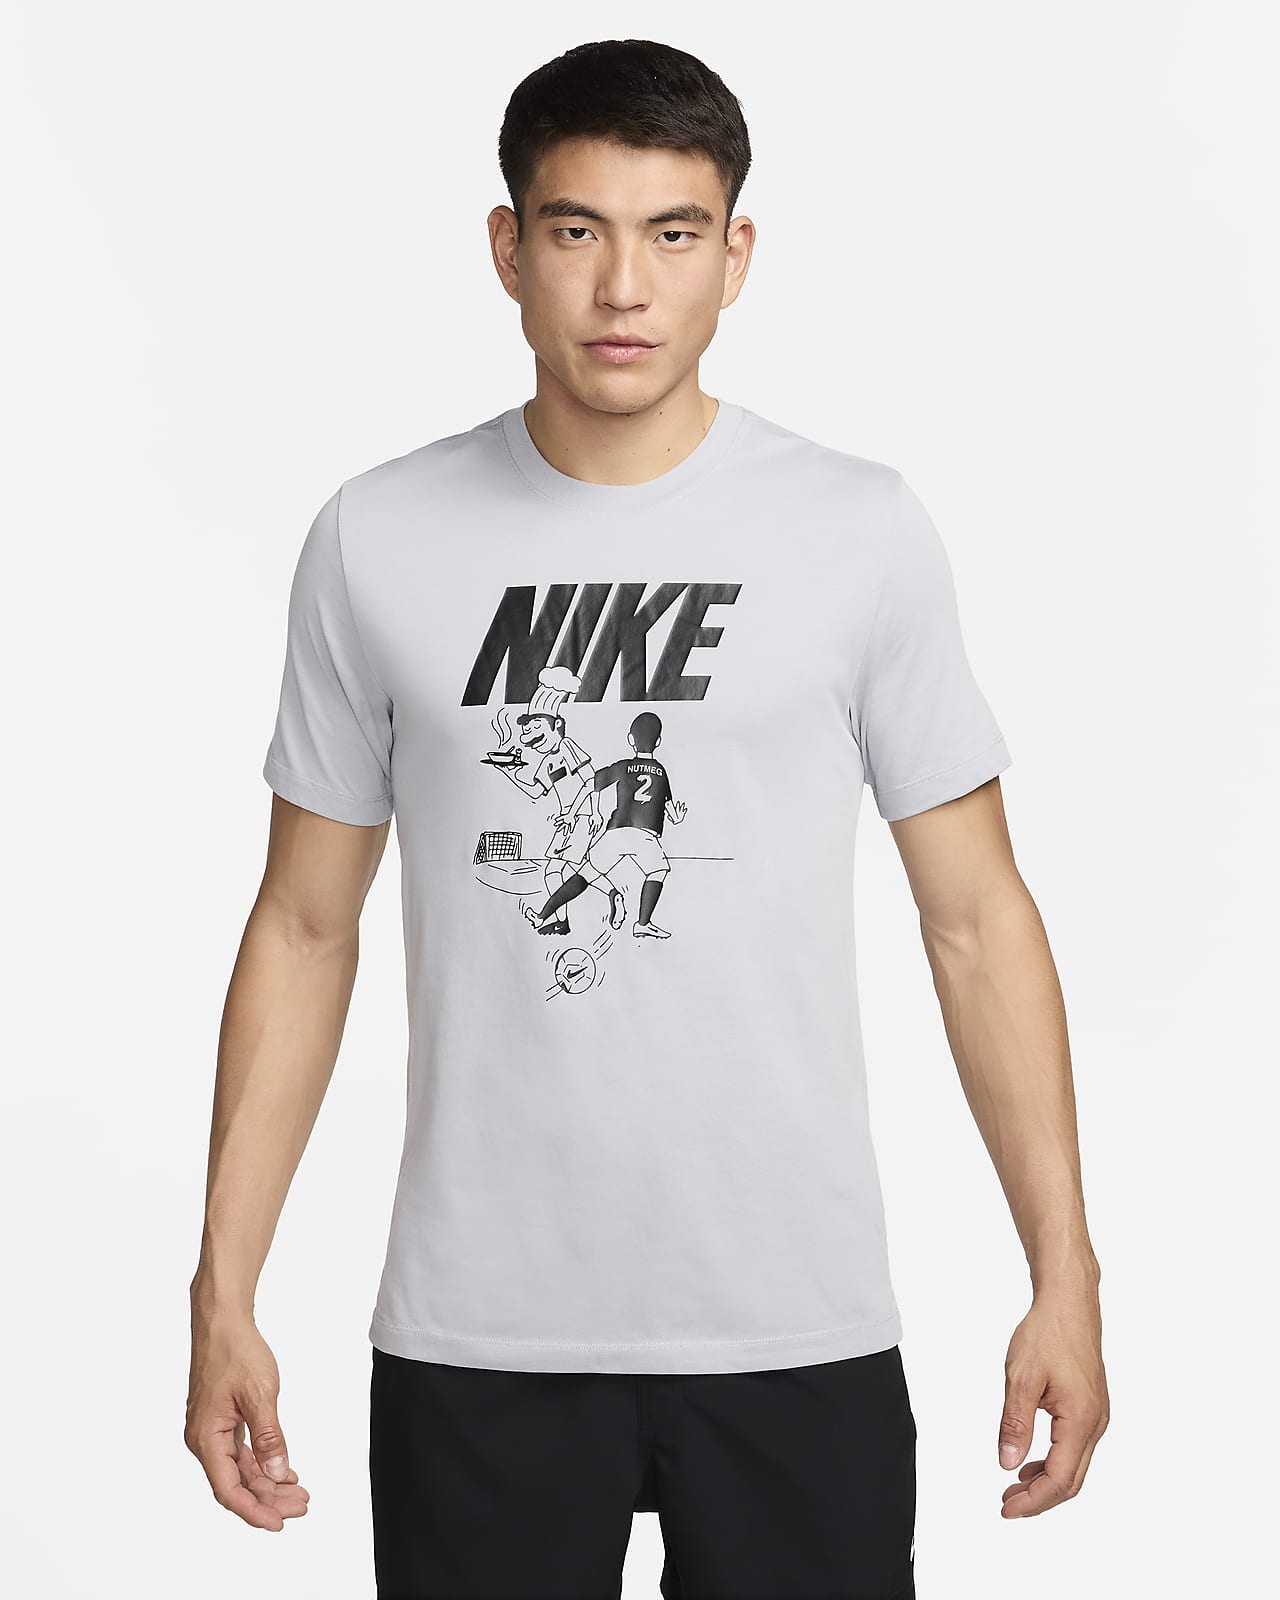 Nike Yoga Dri-FIT graphic logo t-shirt in black